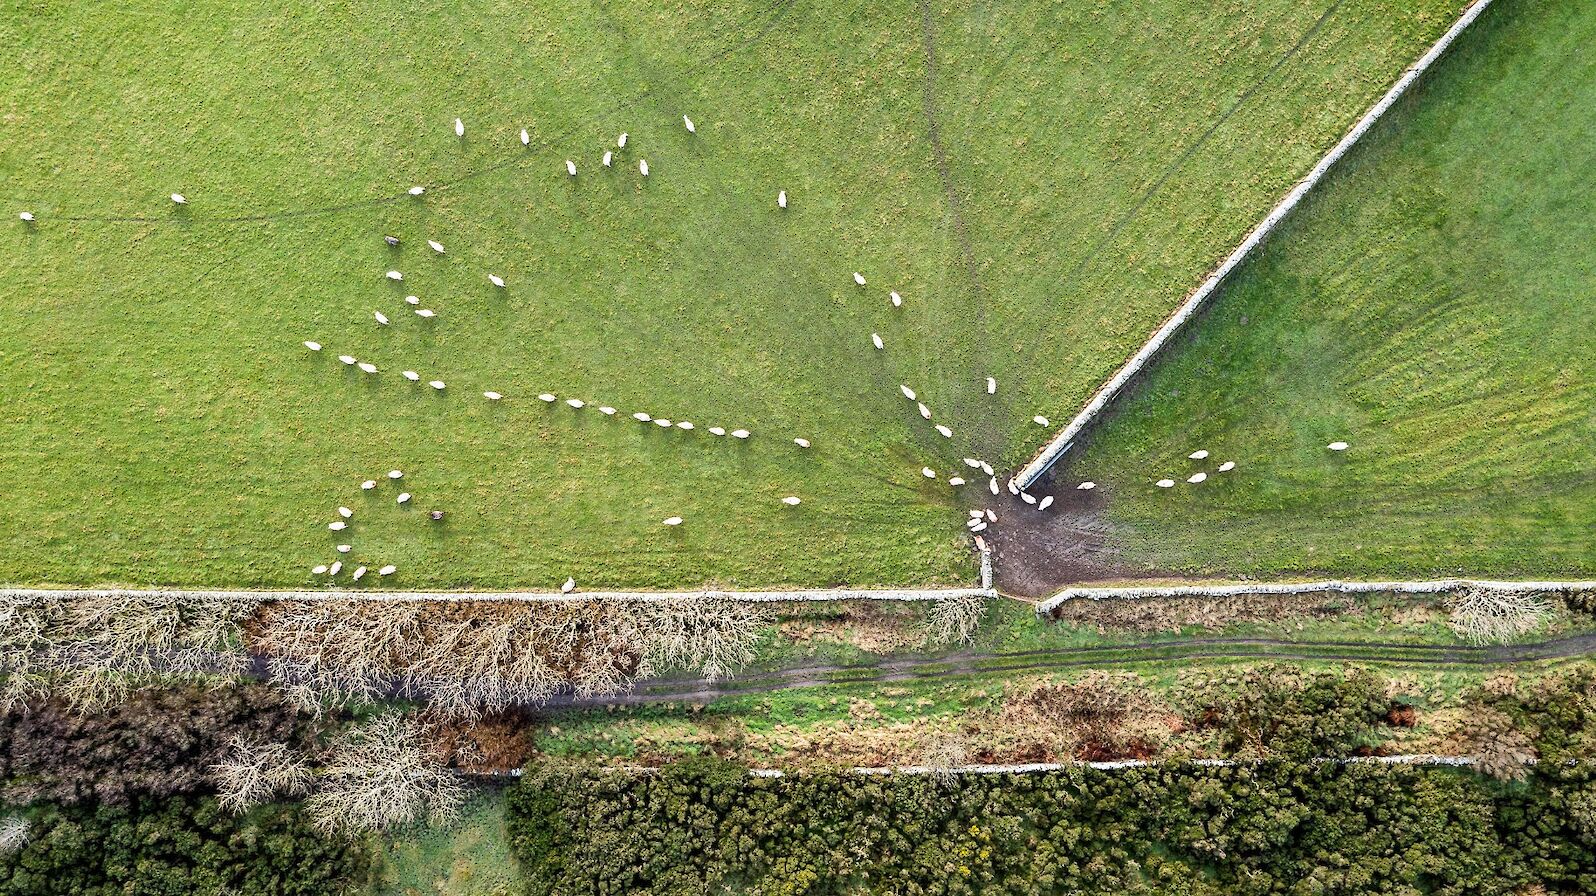 Sheep at Binscarth, Orkney - image by Andras Farkas